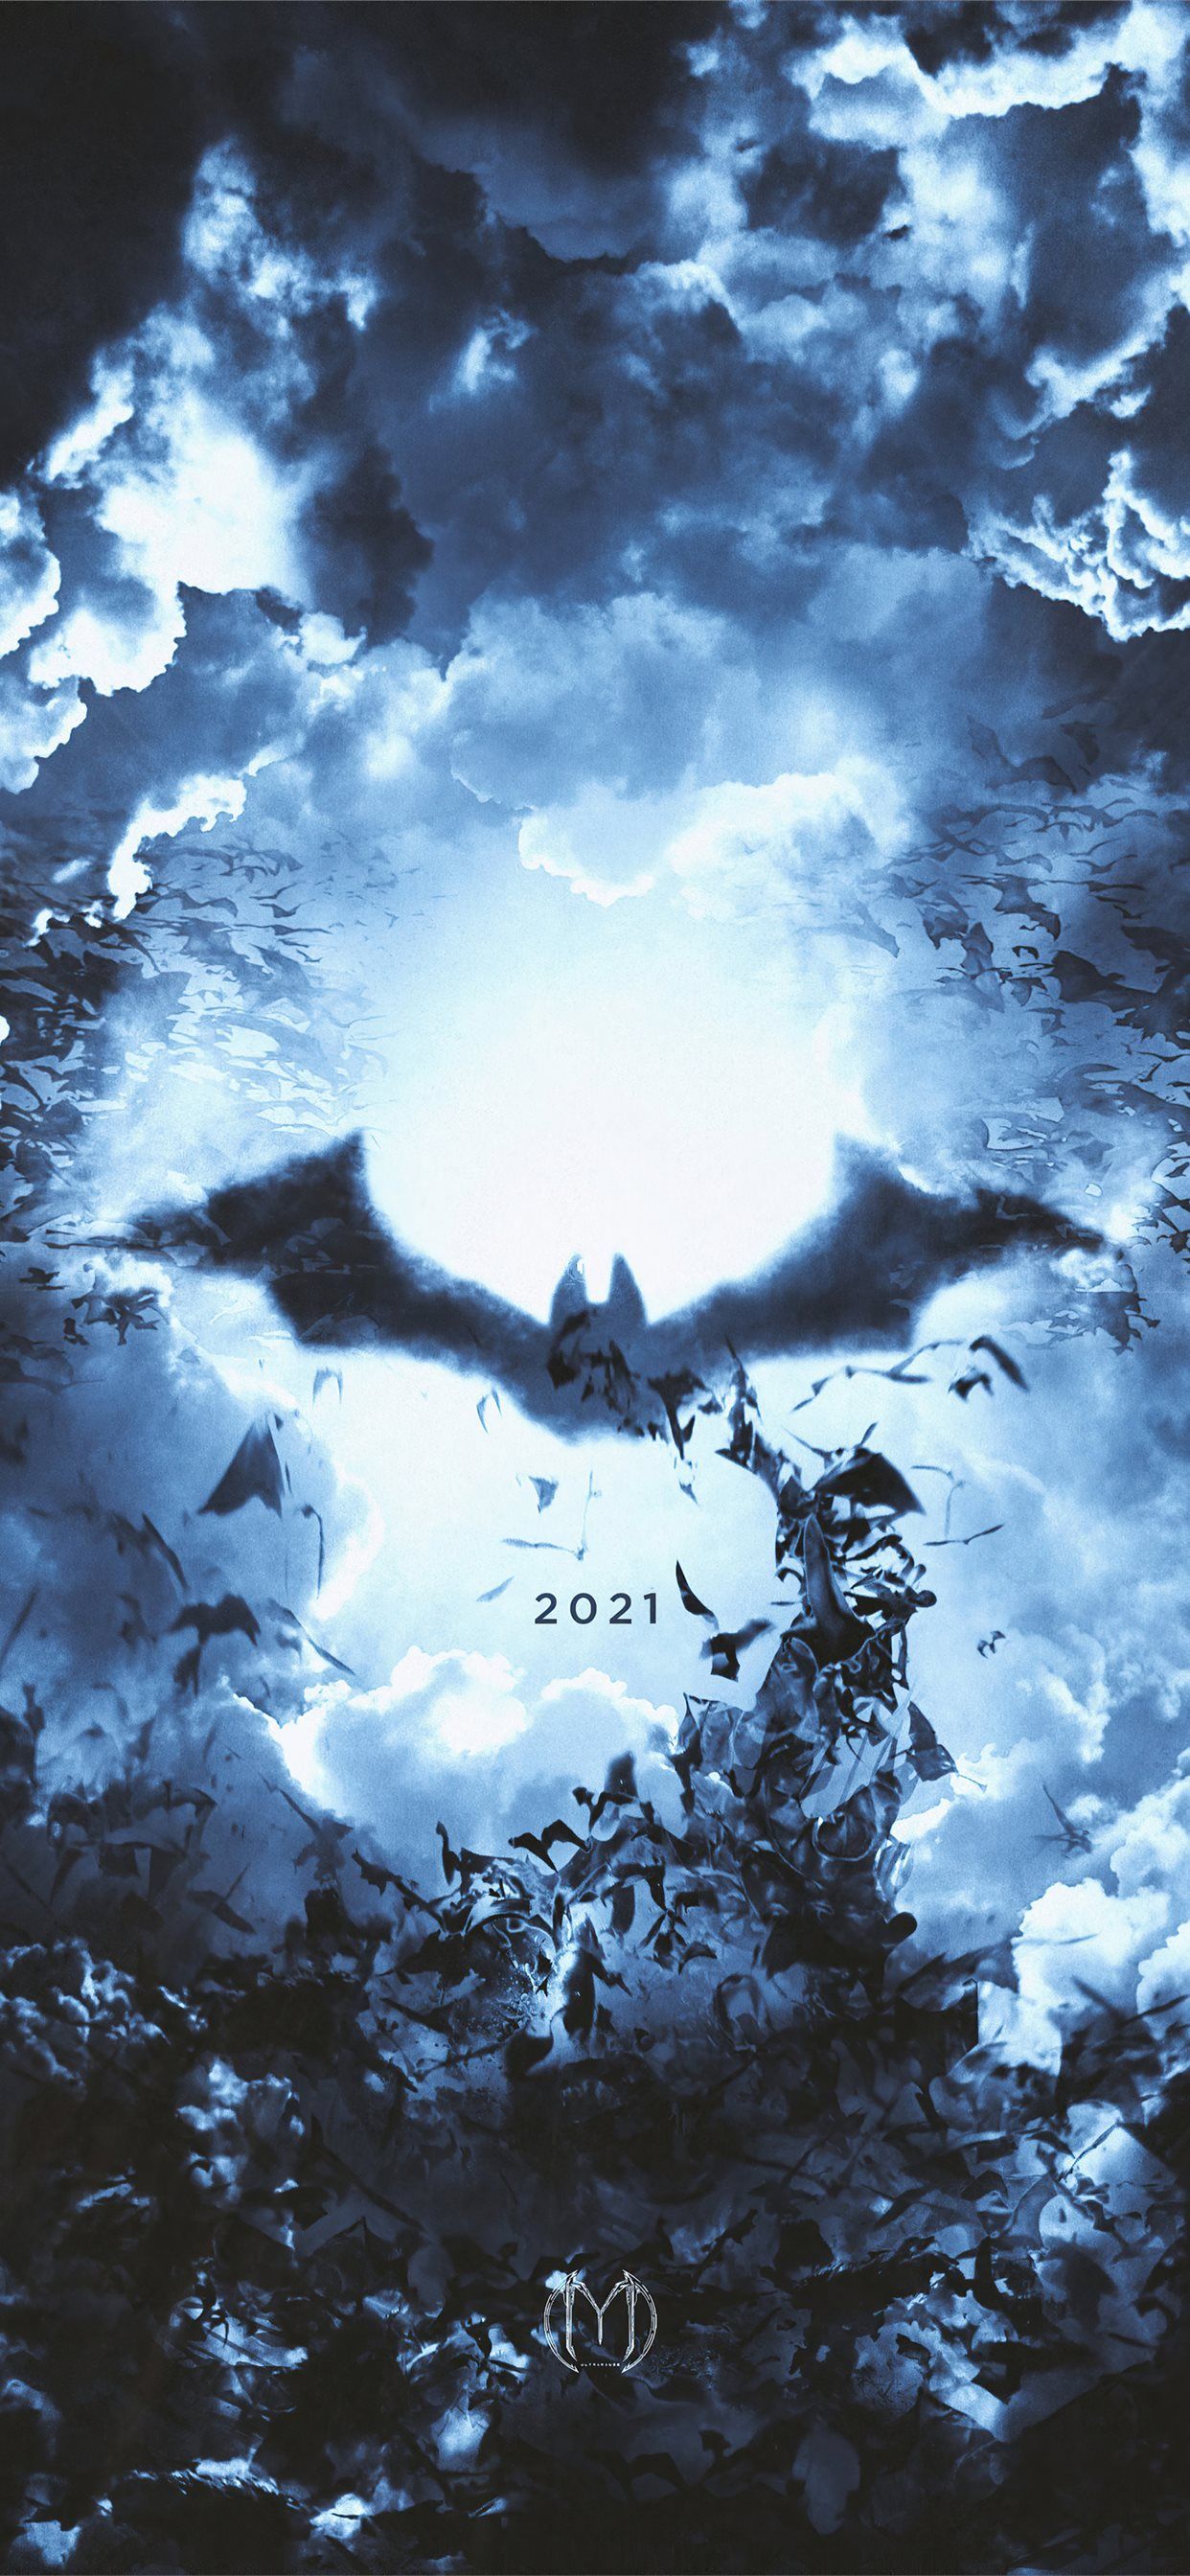 the batman logo 2021 iPhone 11 Wallpaper Free Download